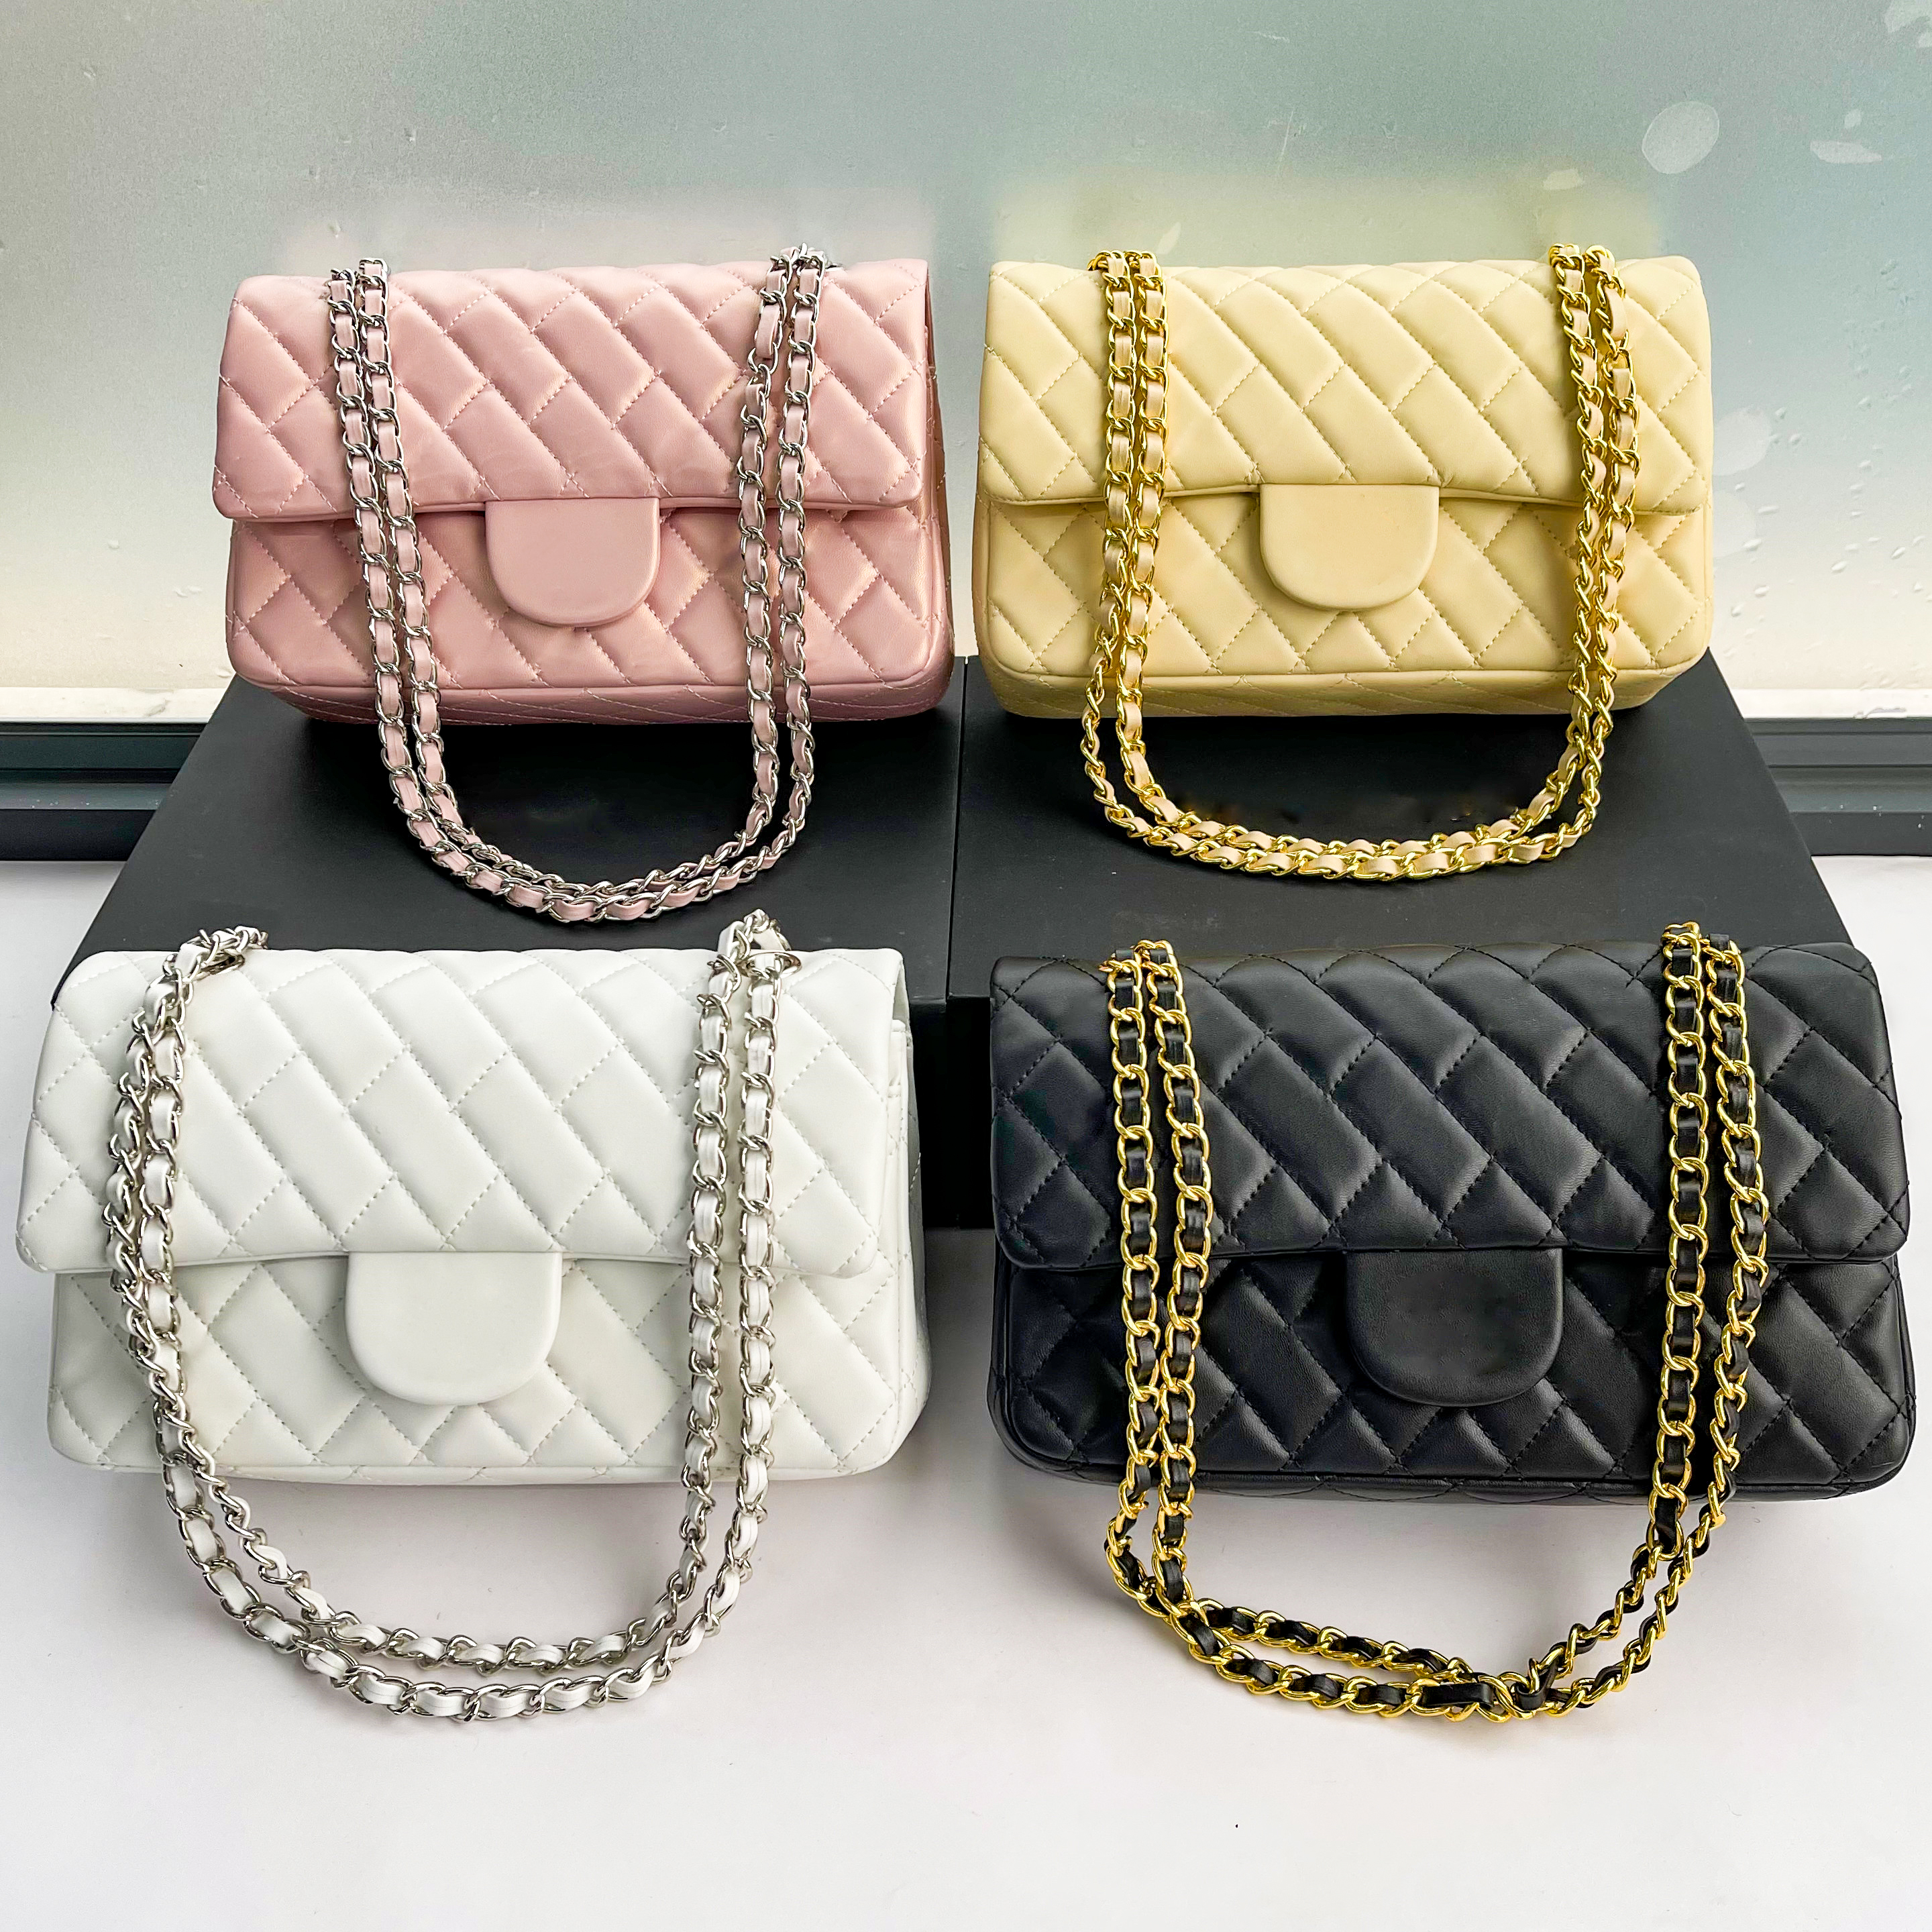 Top qulity classic womens shoulder bags handbags tote woc ladies Designer luxury casual large hobo Shopping bag leather Crossbody handbag purses